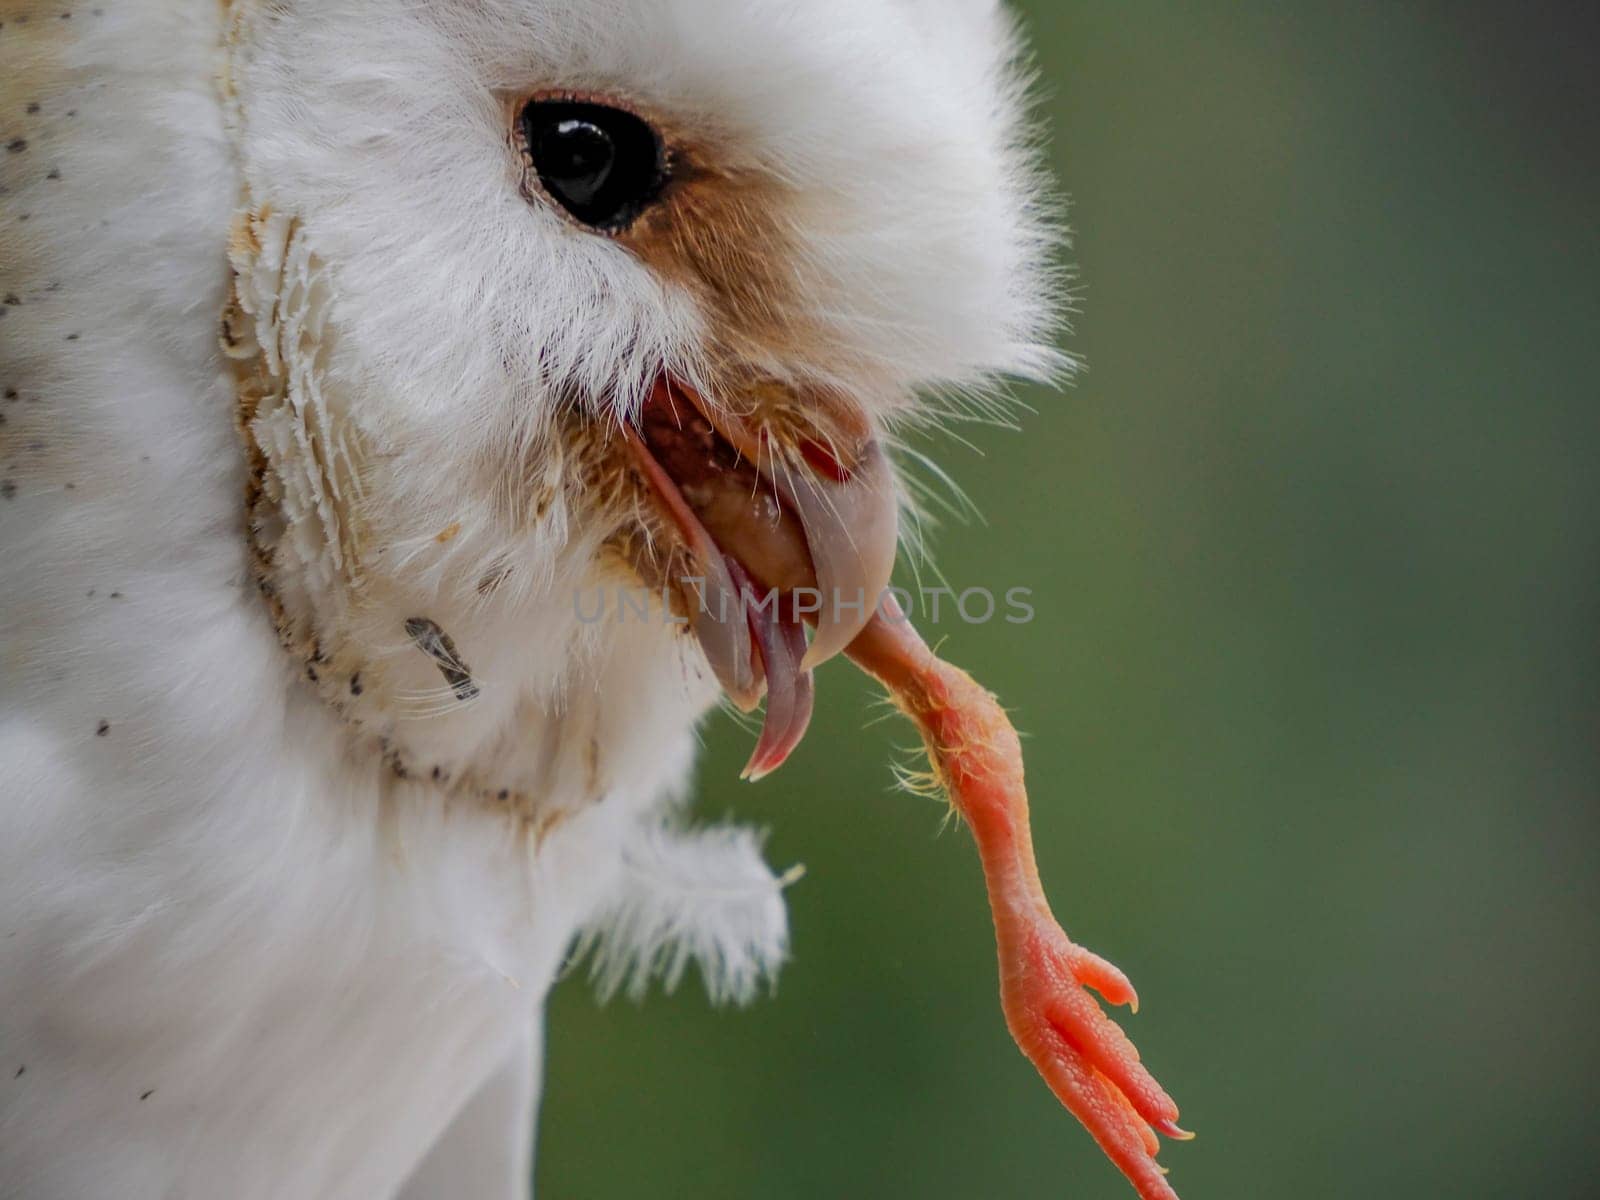 common barn owl Tyto albahead eating a prey by AndreaIzzotti